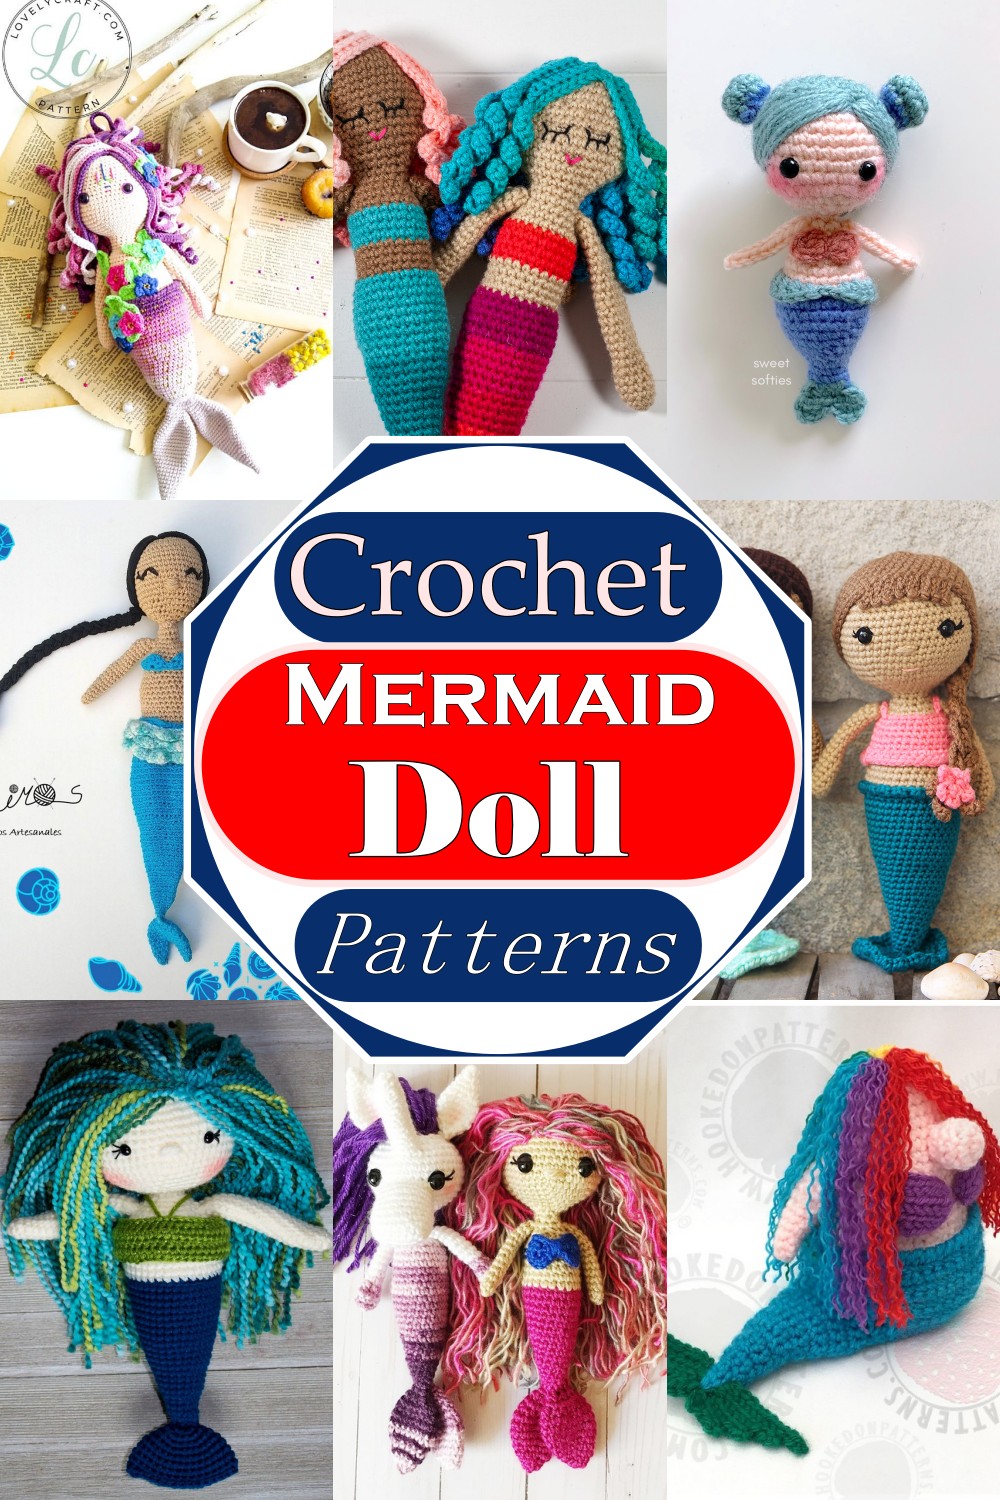 Crochet Mermaid Doll Patterns